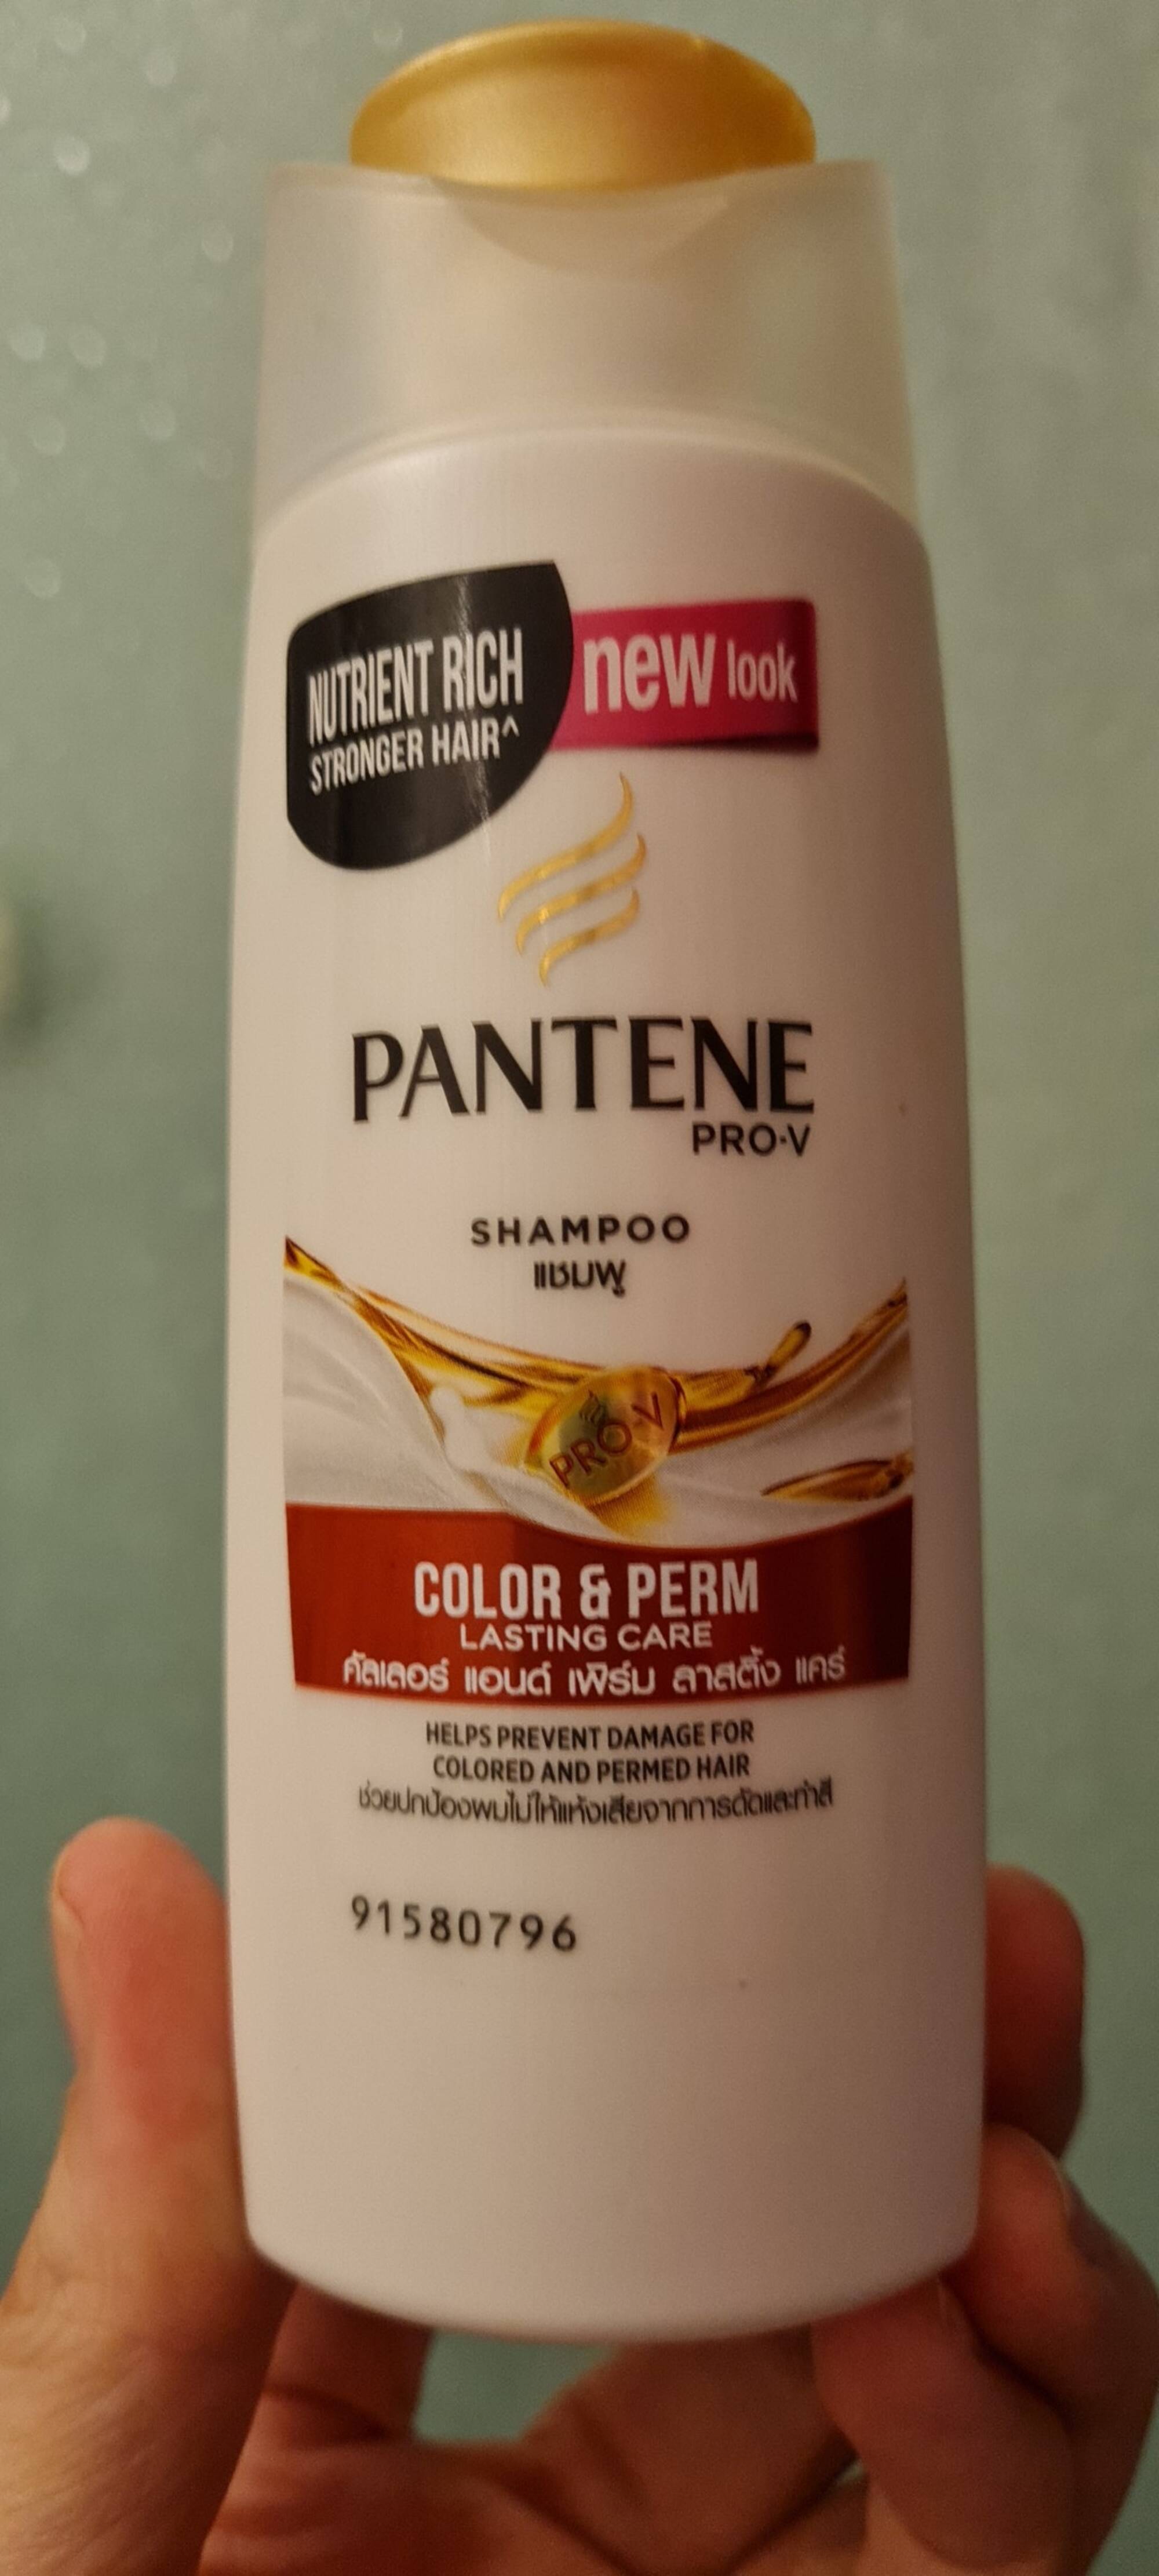 PANTENE PRO-V - Color & perm - Shampoo